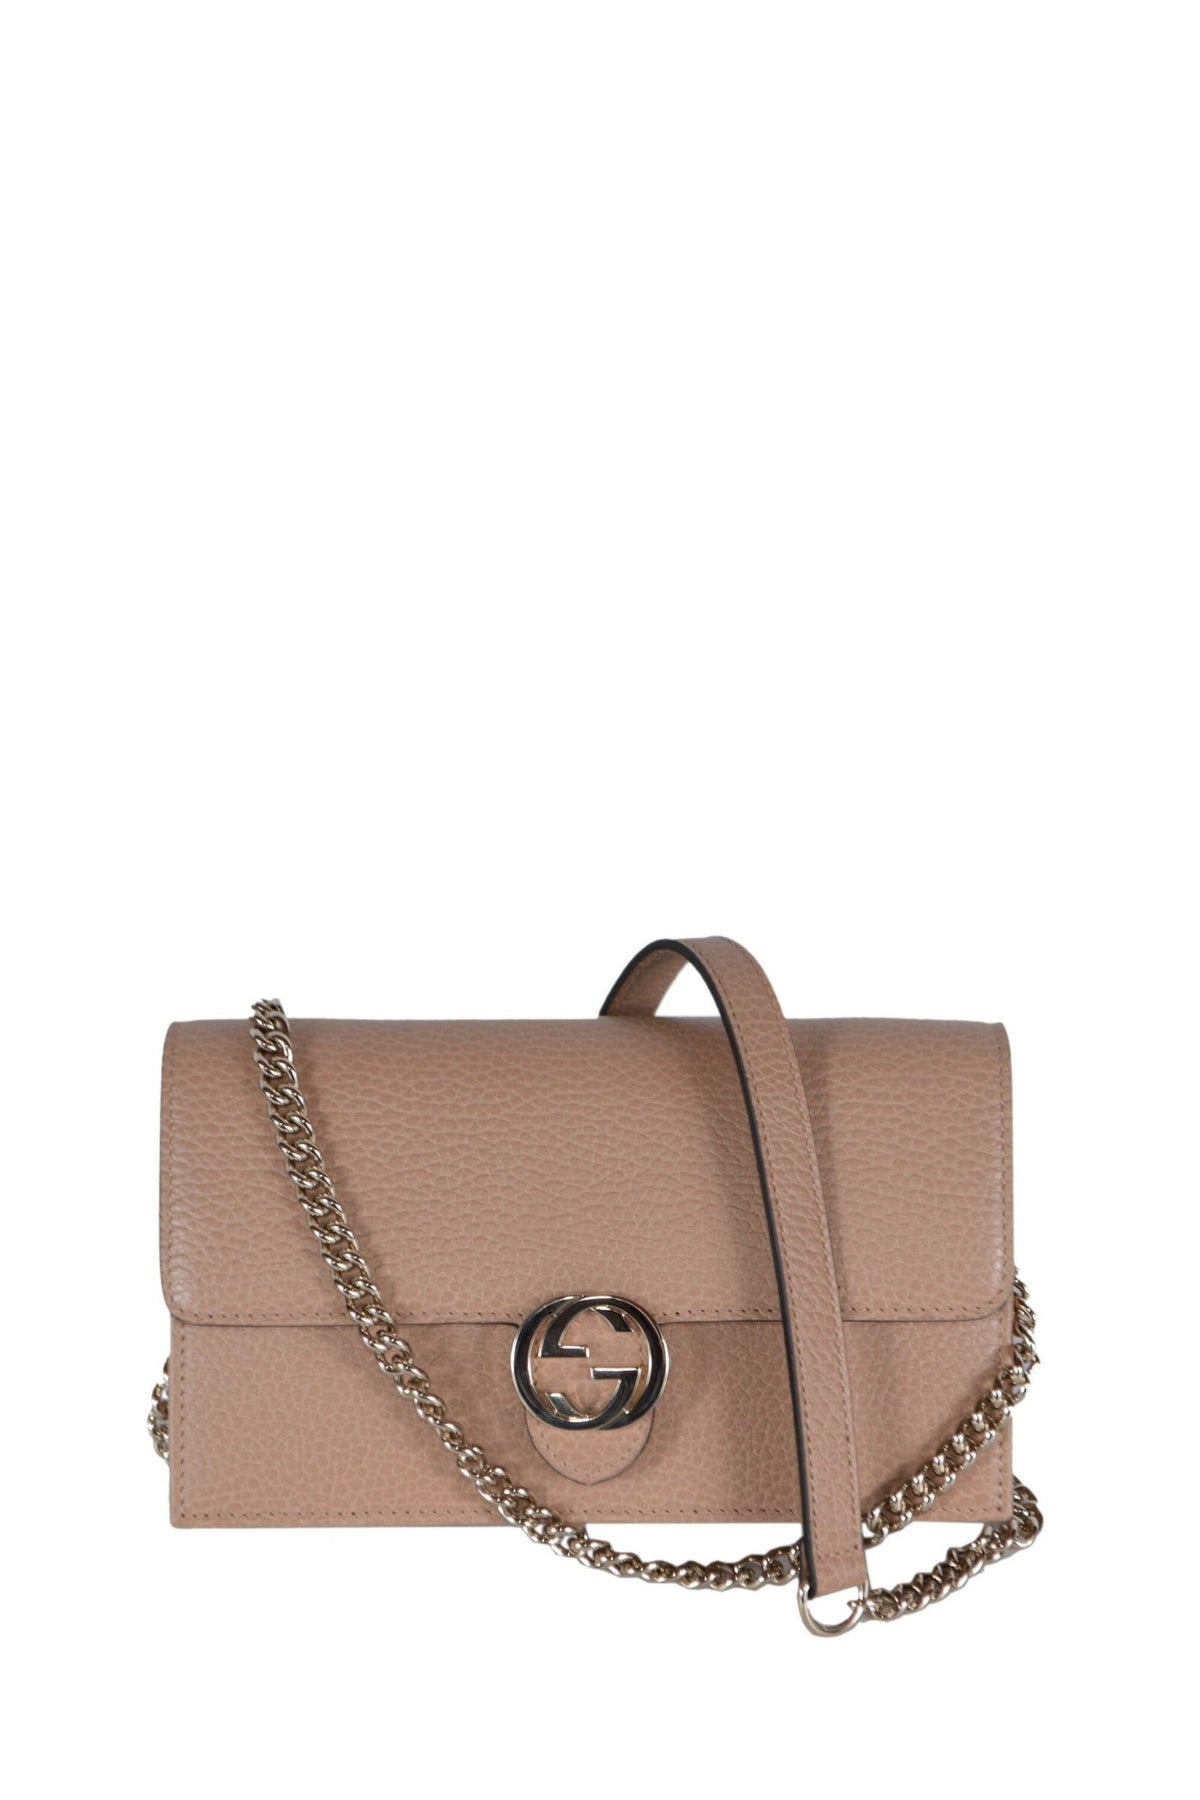 Gucci Interlocking GG Small Leather Shoulder Bag